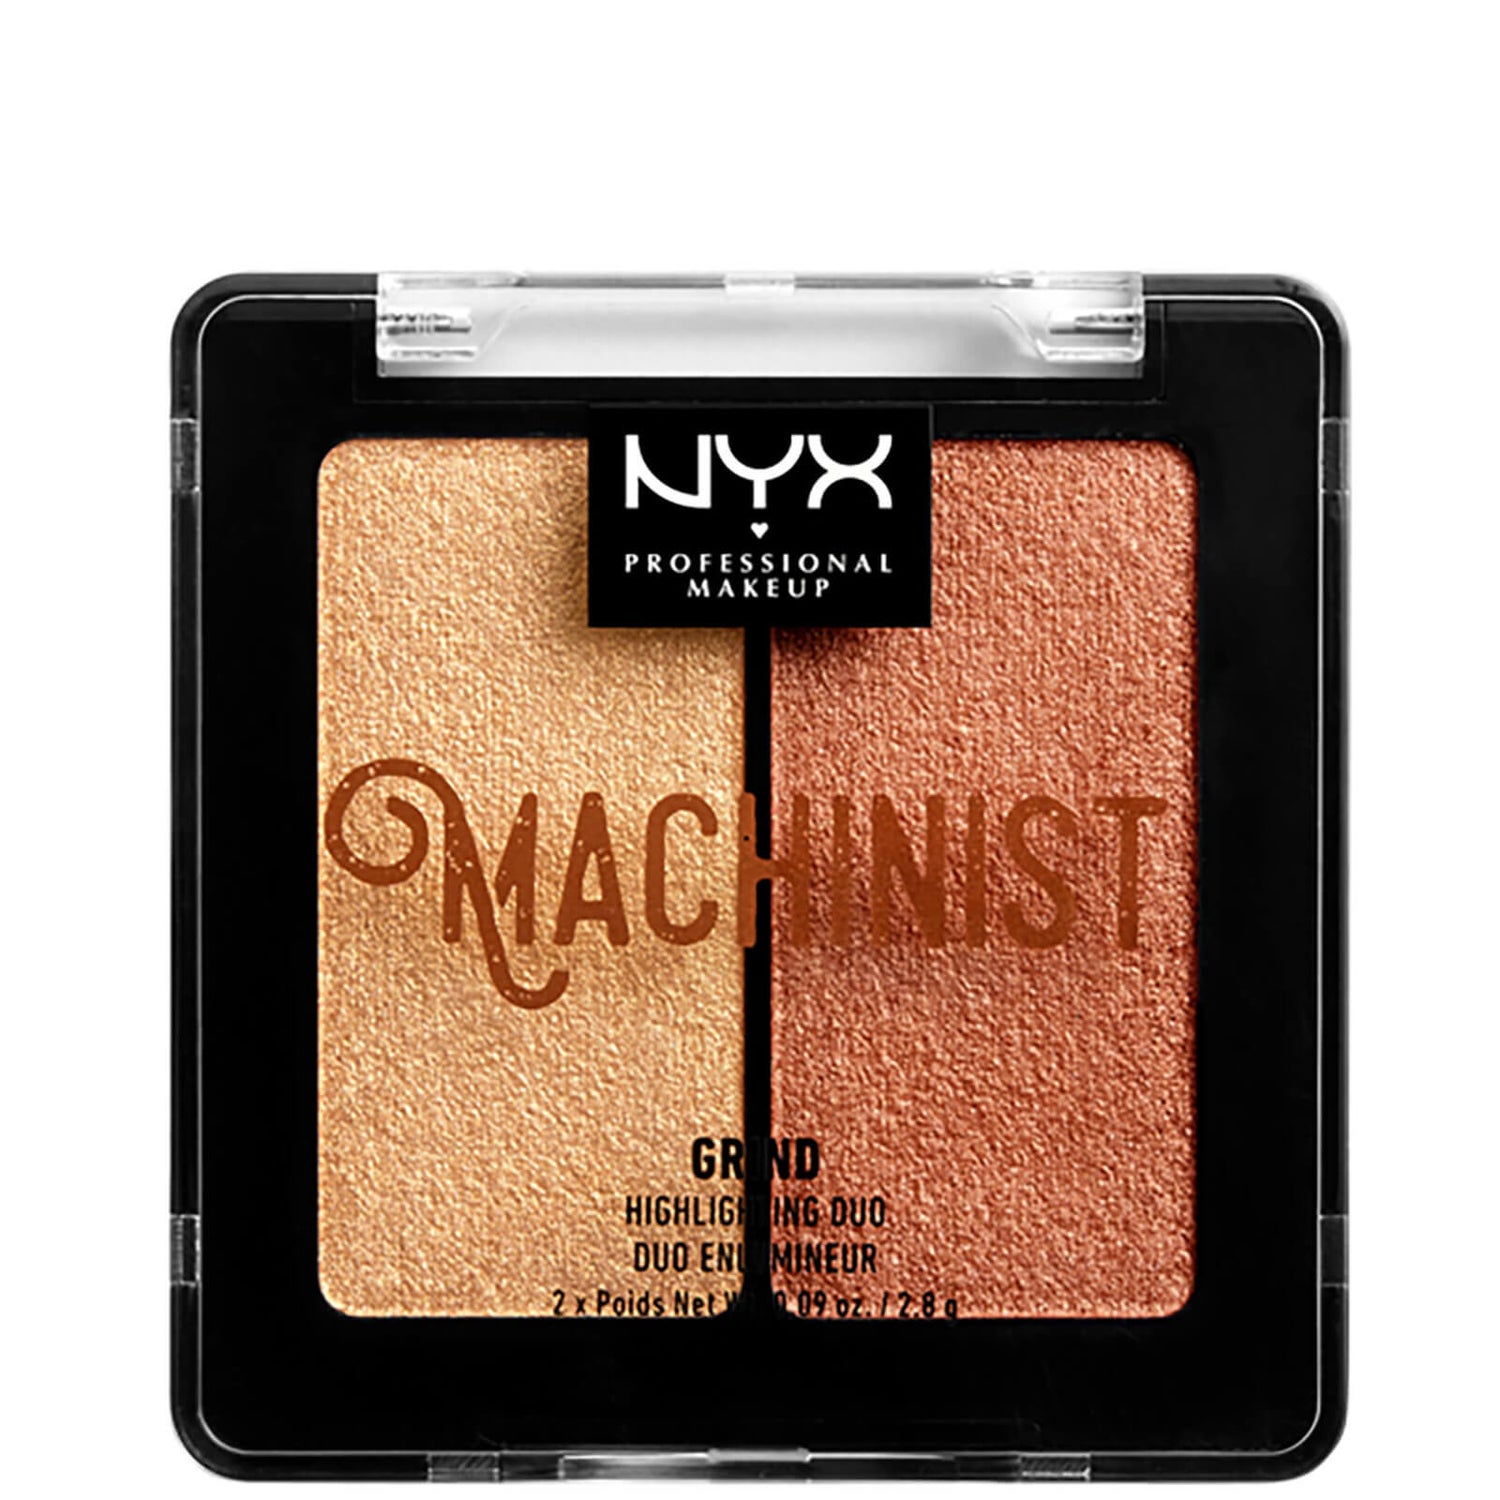 NYX Professional Makeup Machinist Highlighter Duo Kit podwójny rozświetlacz – Grind